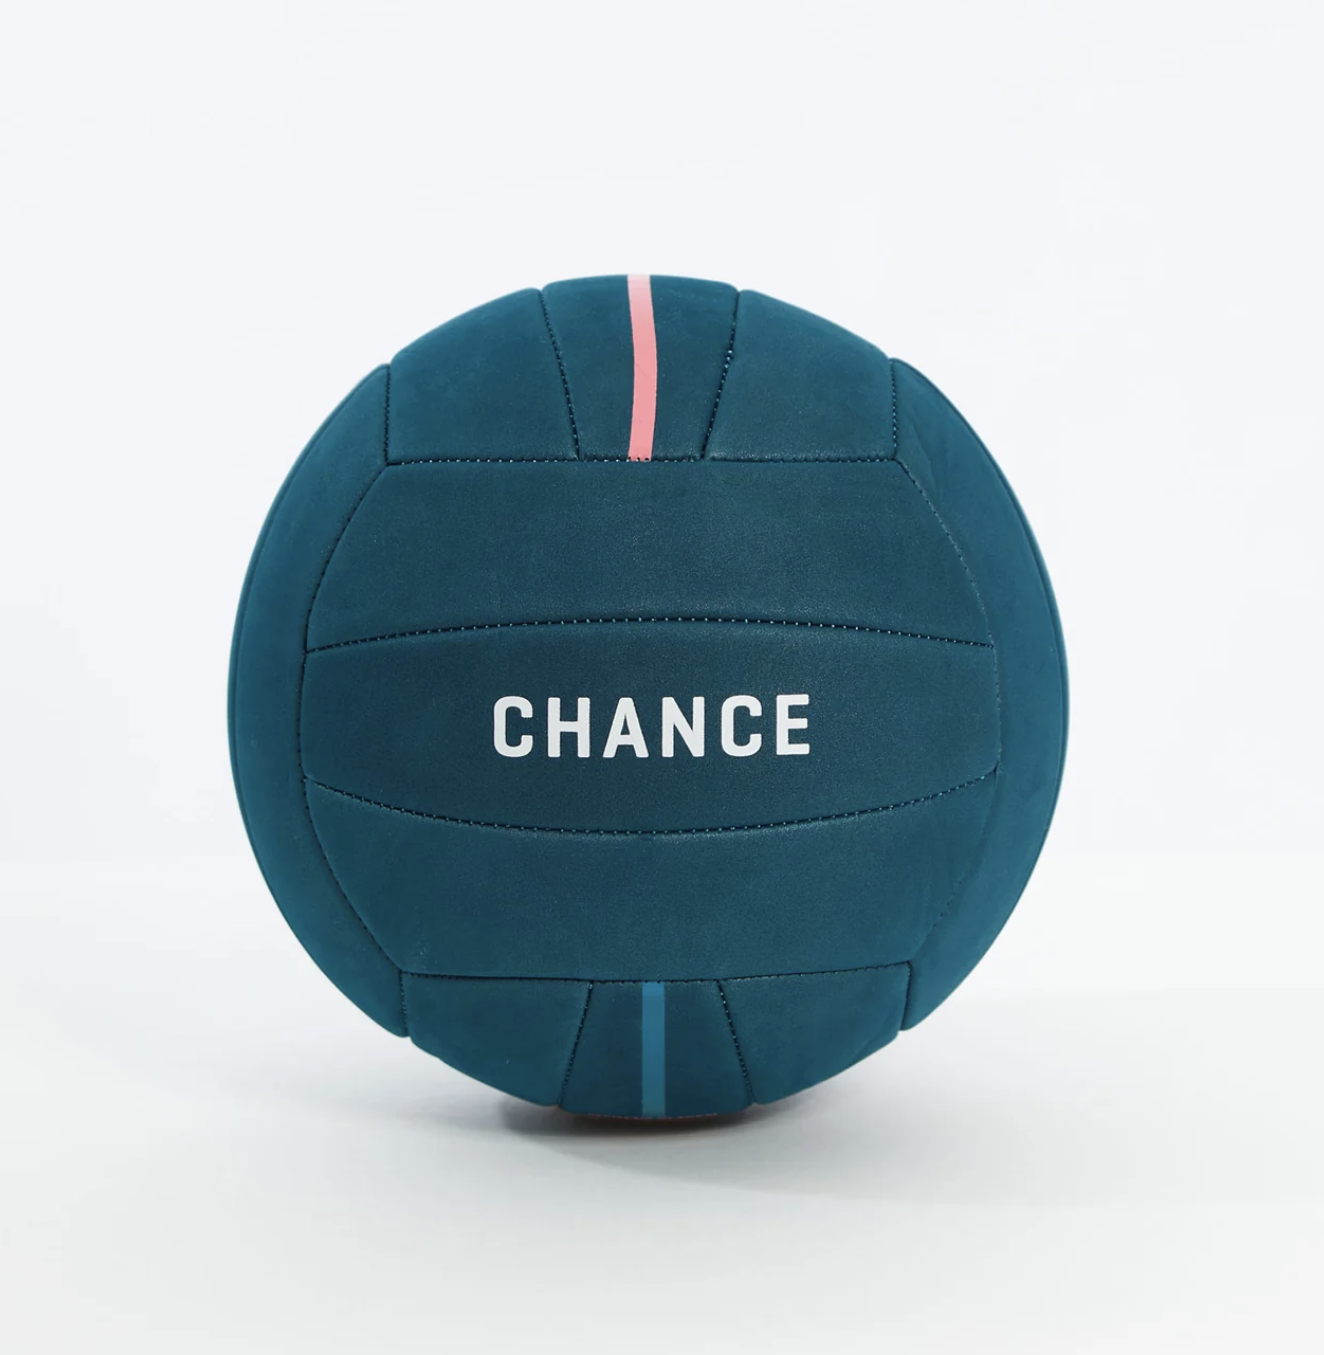 Chance Volleyballs